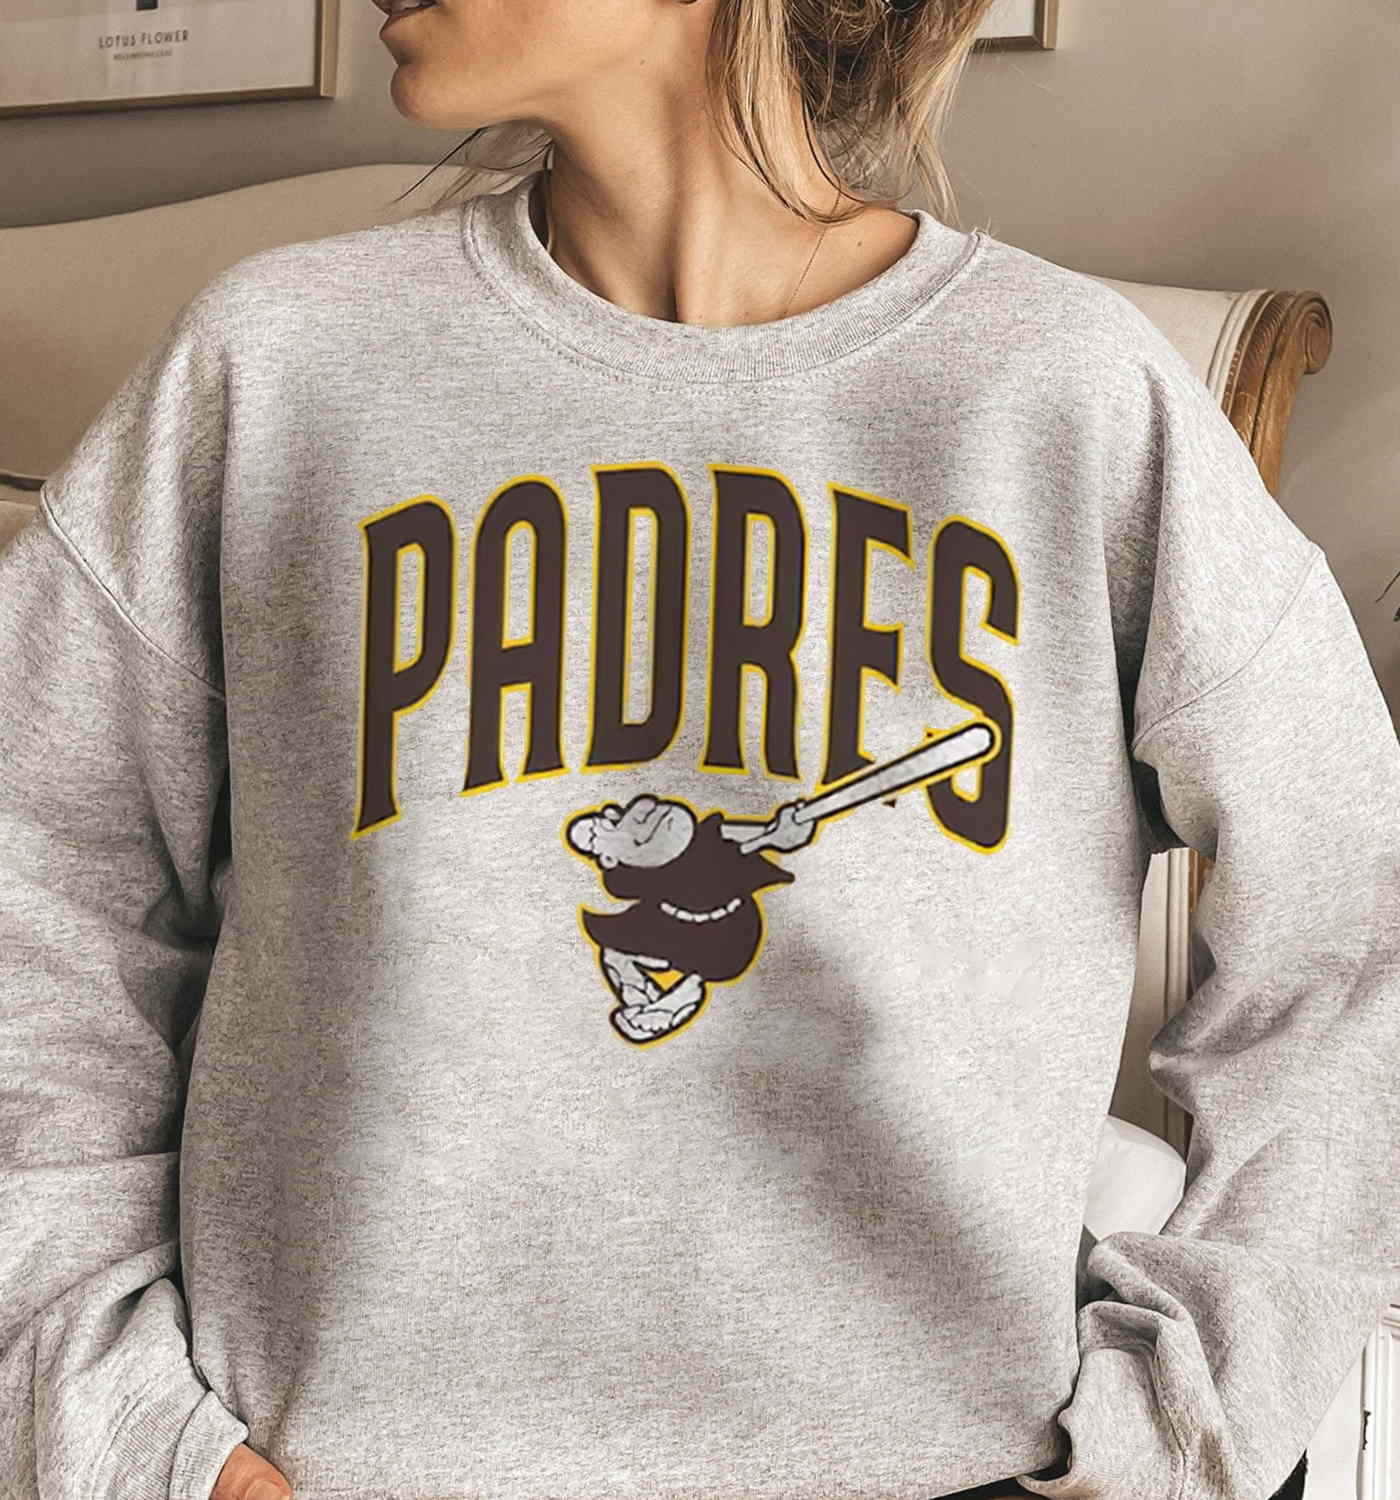 San Diego Padres EST 1969 Sweatshirt Shirt